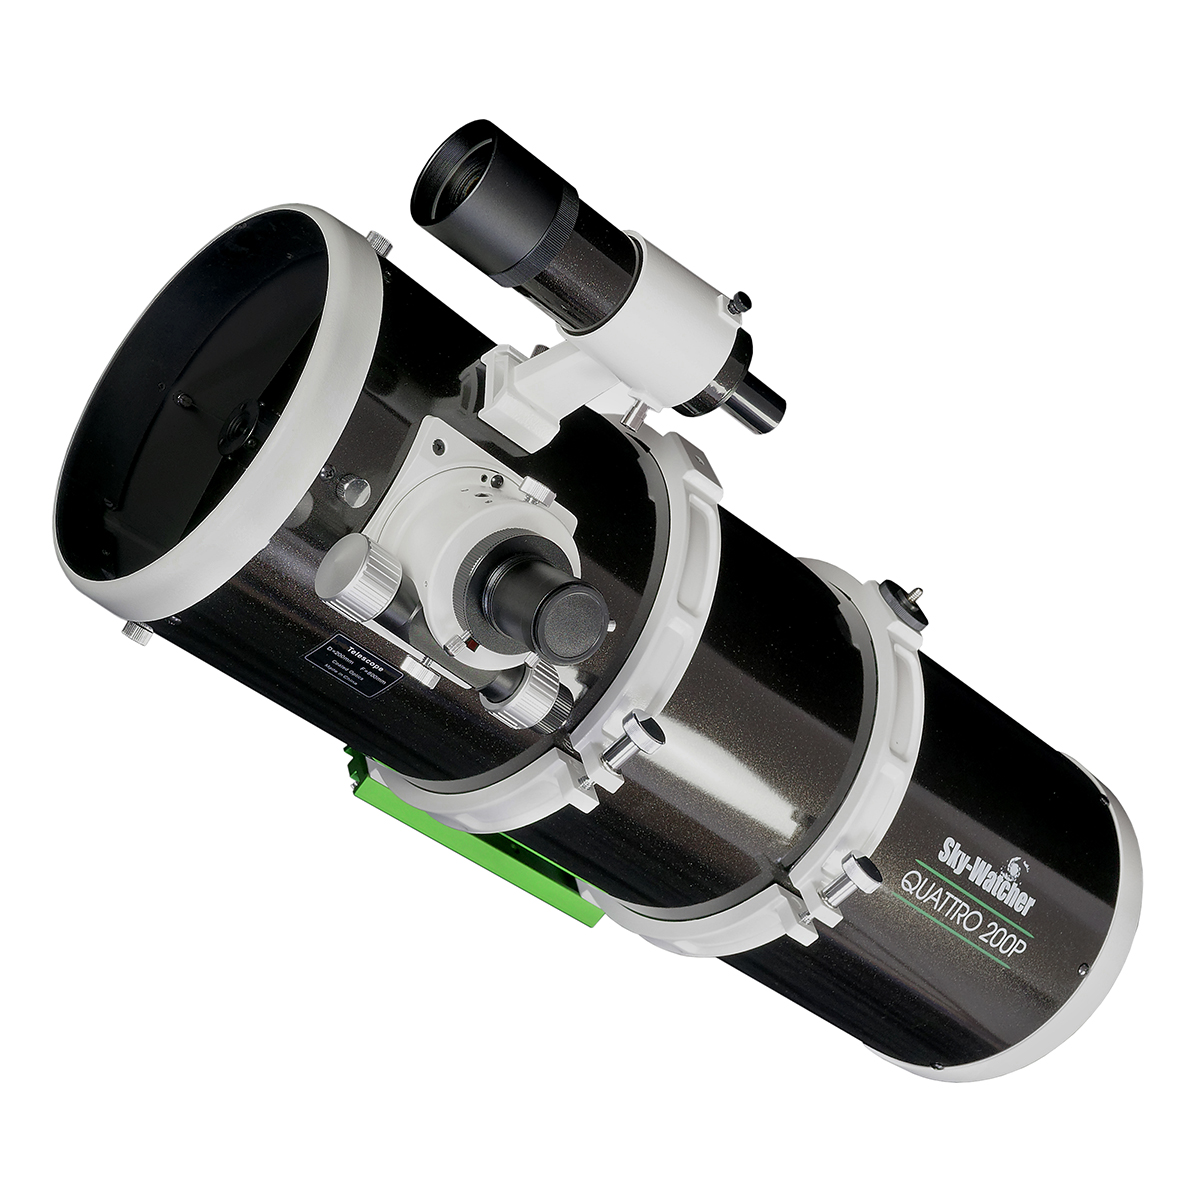   Tubo ottico riflettore newton Black Diamond Wide Photo 200/800 f/4 +  AE Collimation tool Easy Sky Watcher   